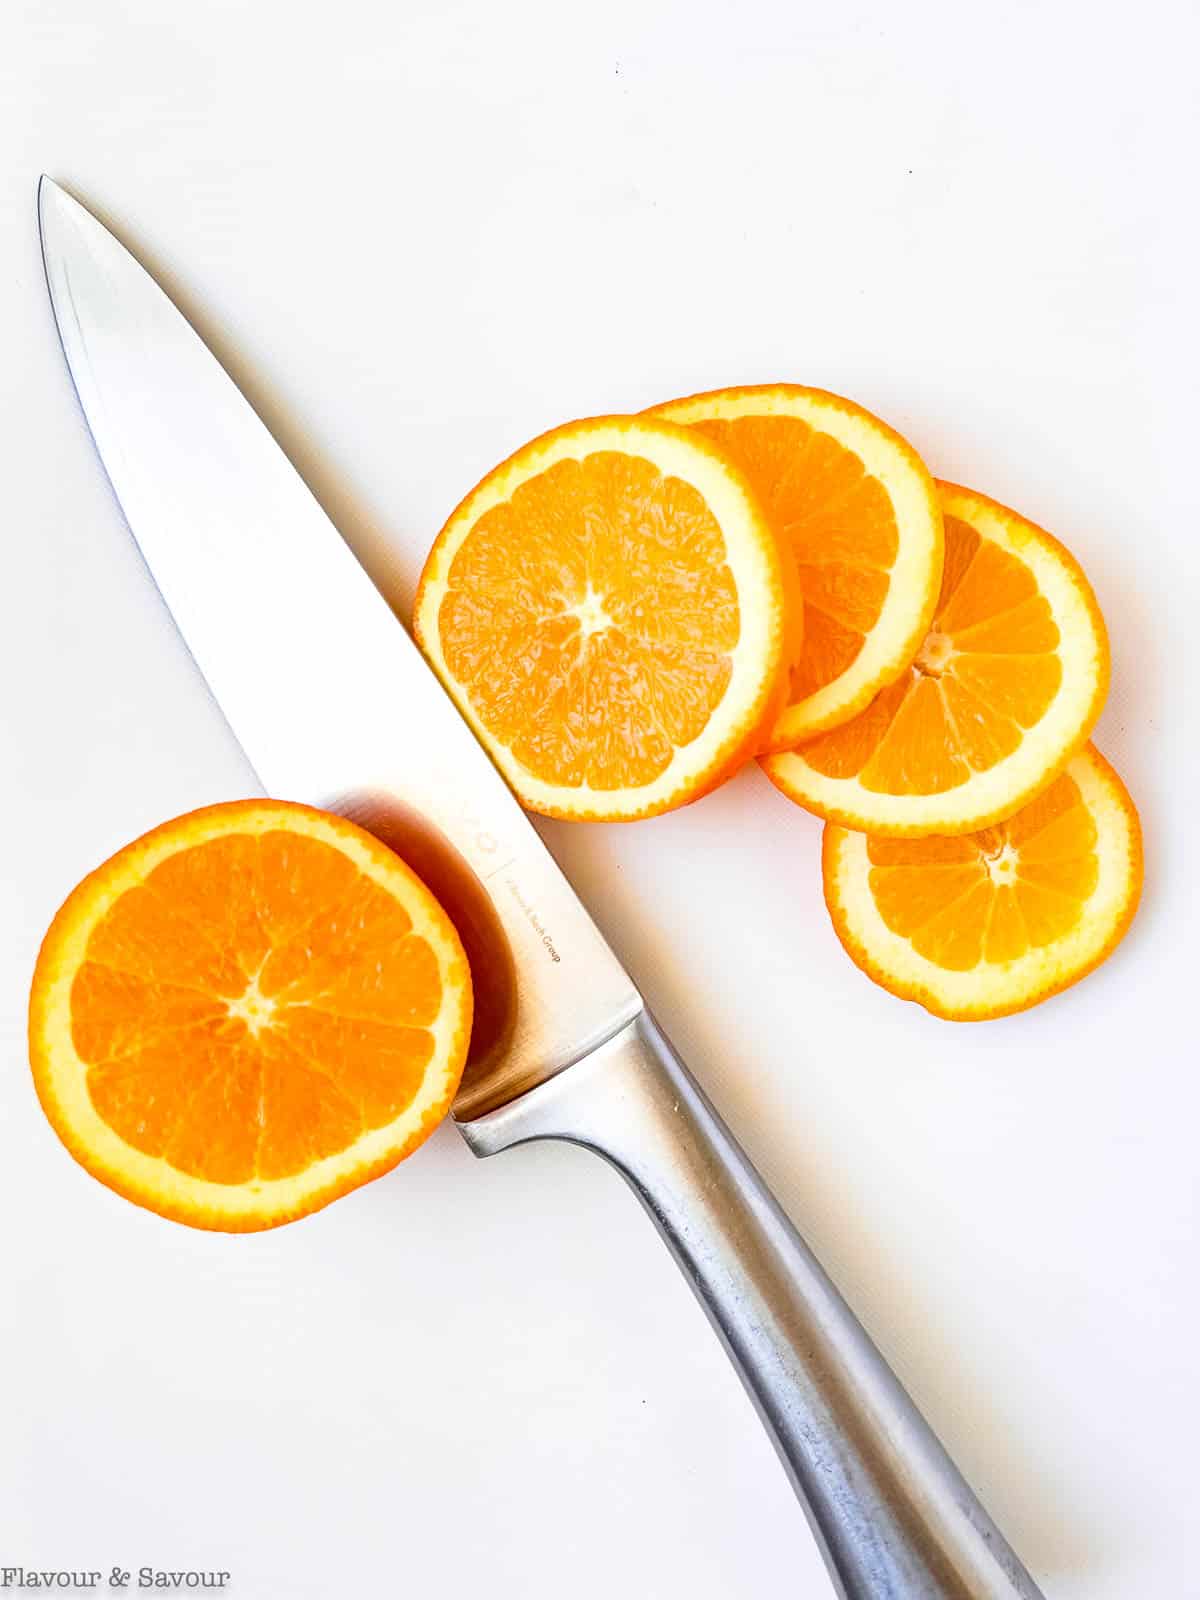 https://www.flavourandsavour.com/wp-content/uploads/2022/08/slicing-oranges-for-dried-orange-slices.jpg